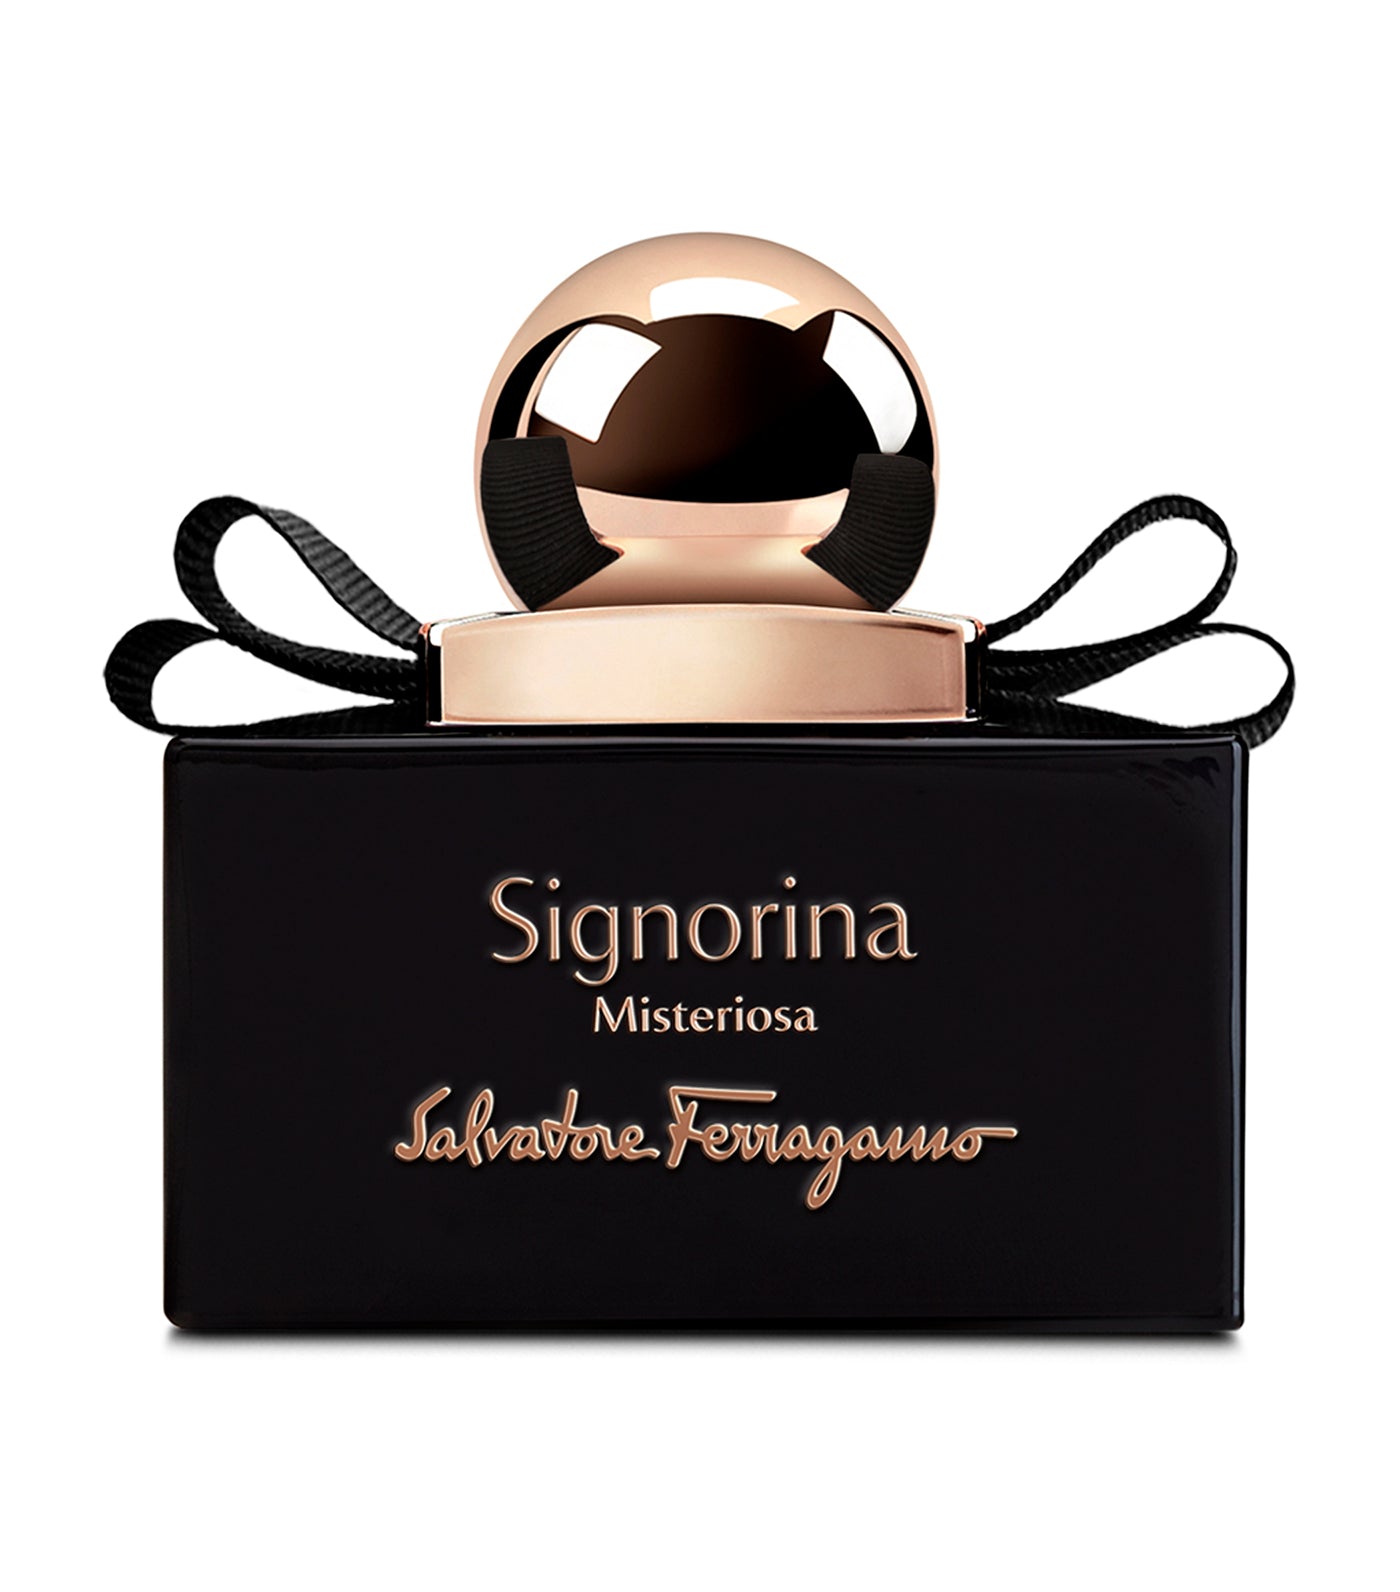 Signorina Misteriosa Eau de Parfum by Ferragamo